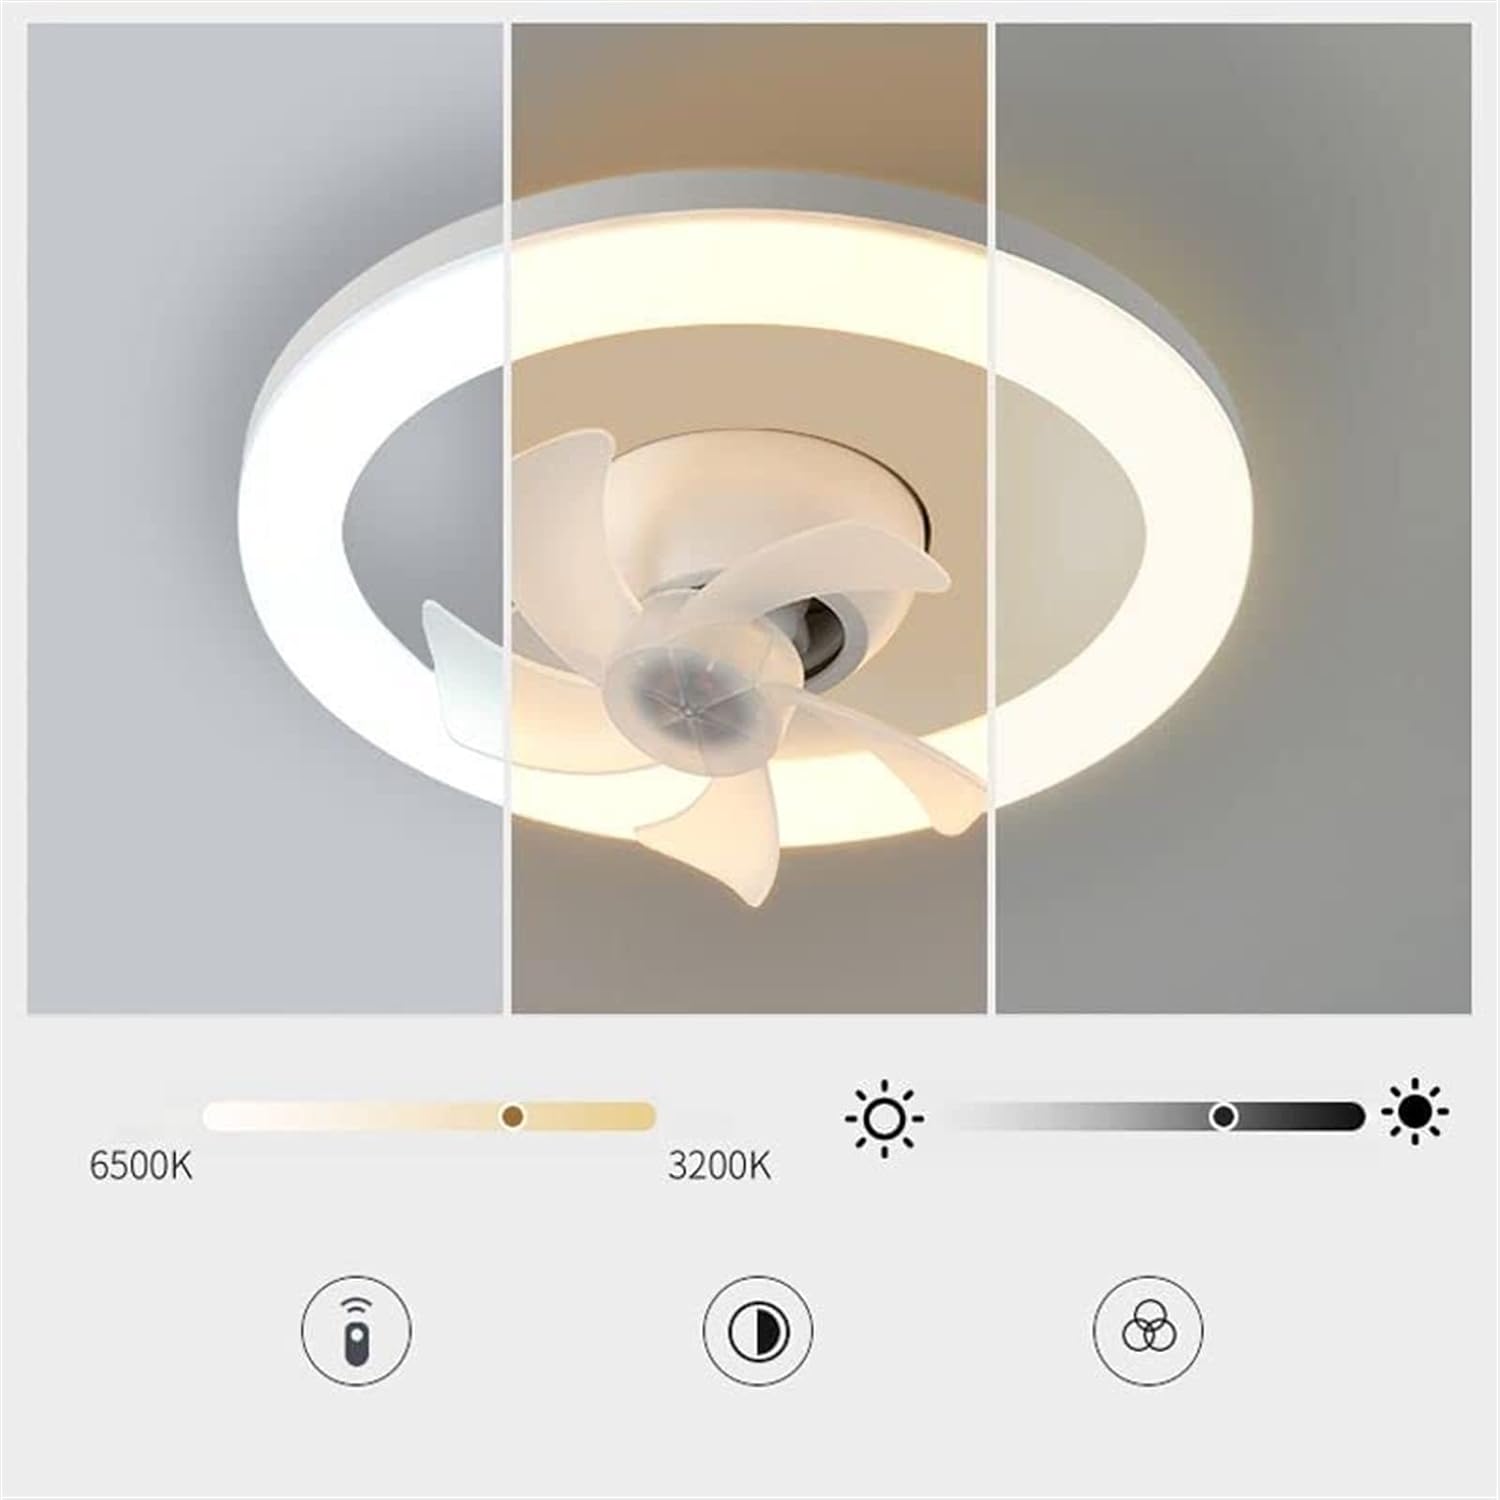 360° Rotation LED Fan Light with adjustable brightness